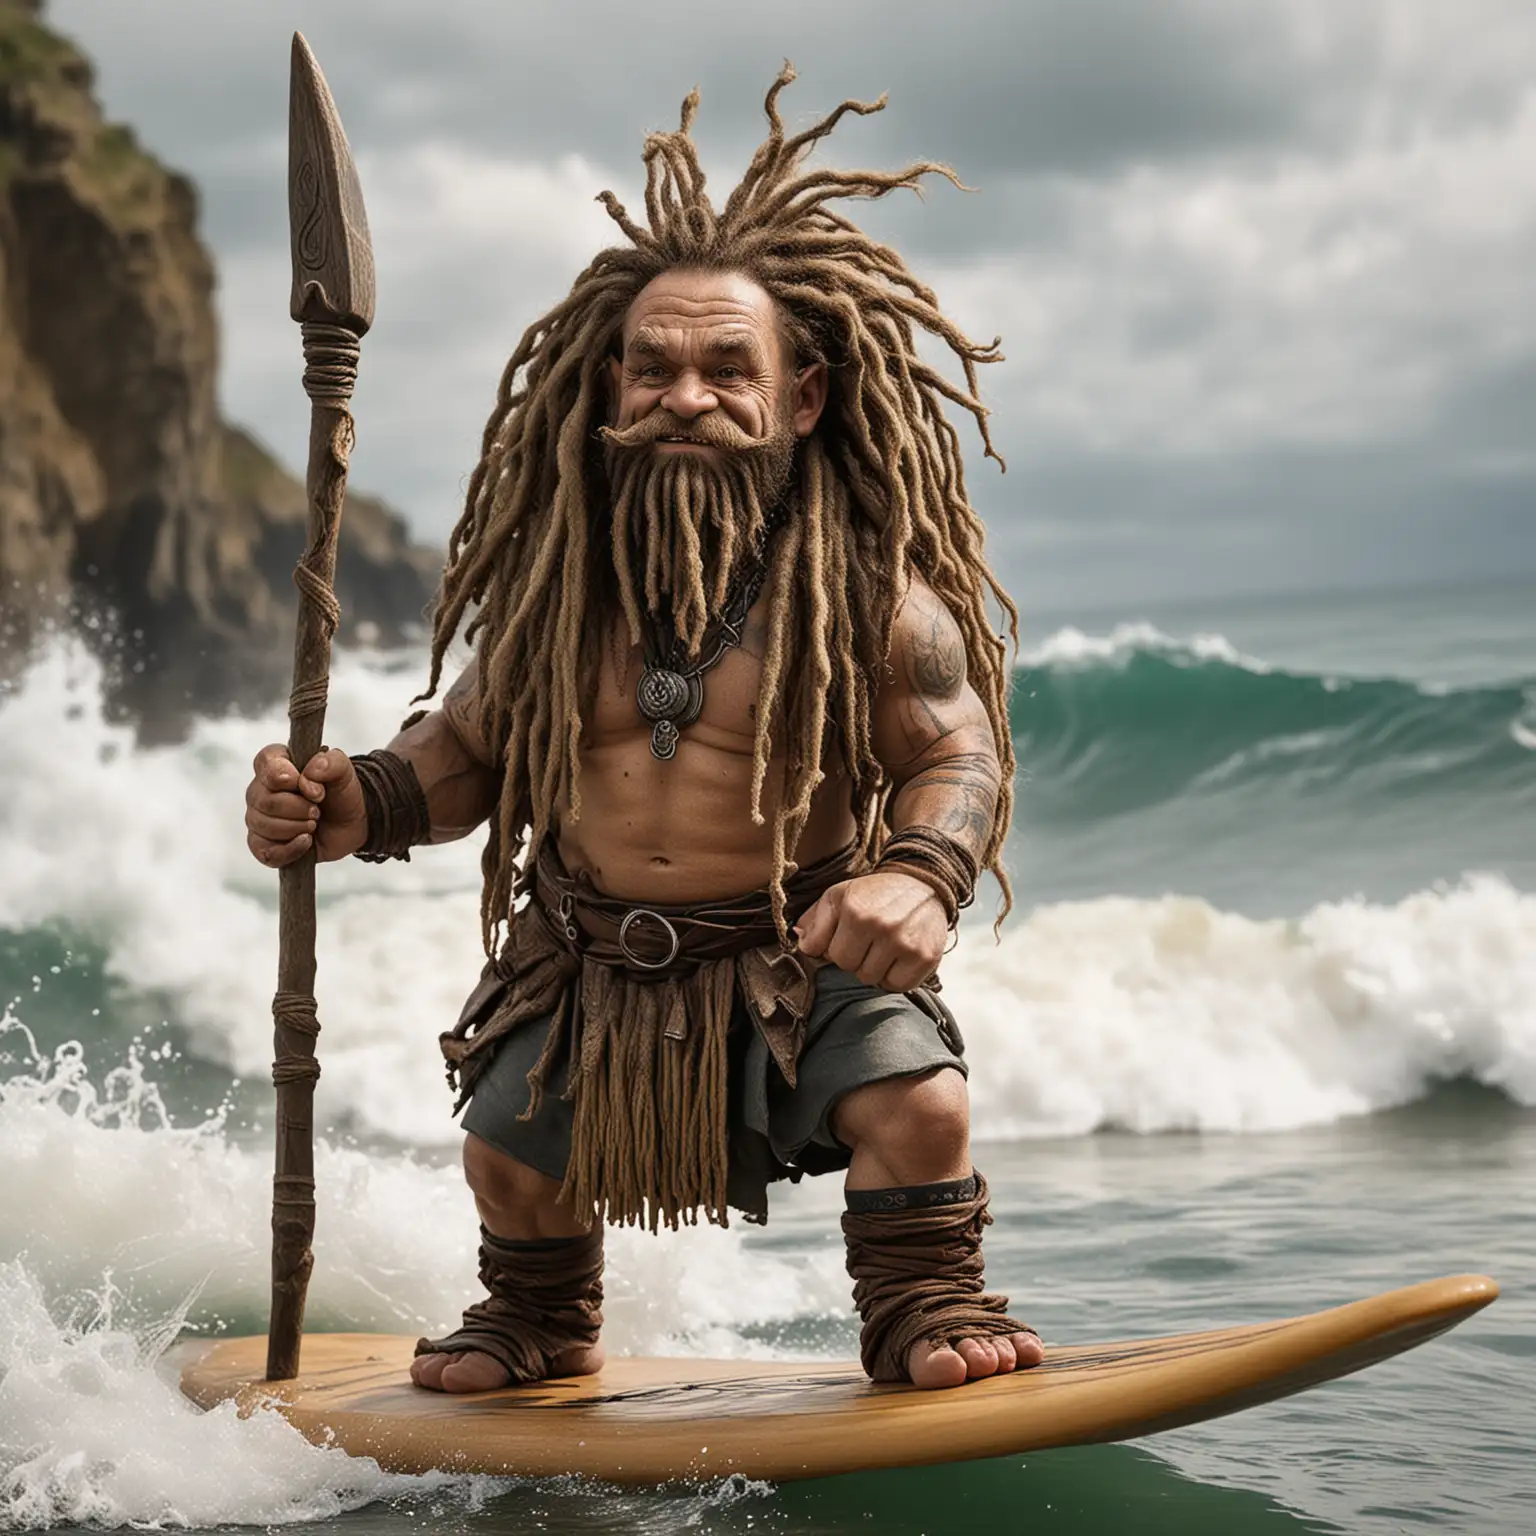 Surfing dwarf with dreadlocks holding a spear